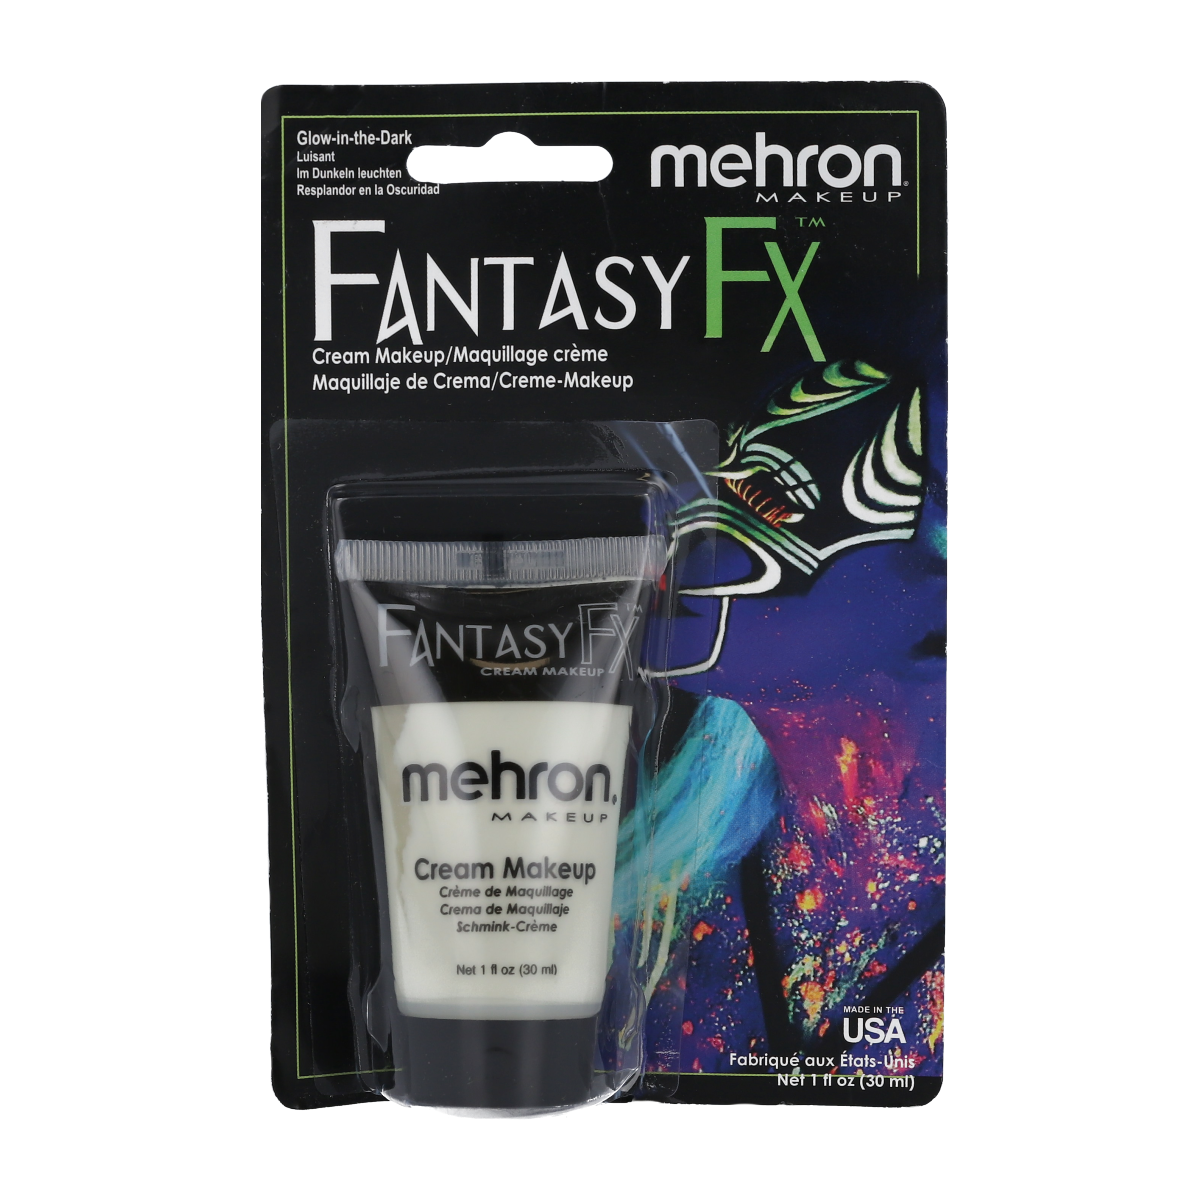 Fantasy FX Makeup - Glow in the Dark